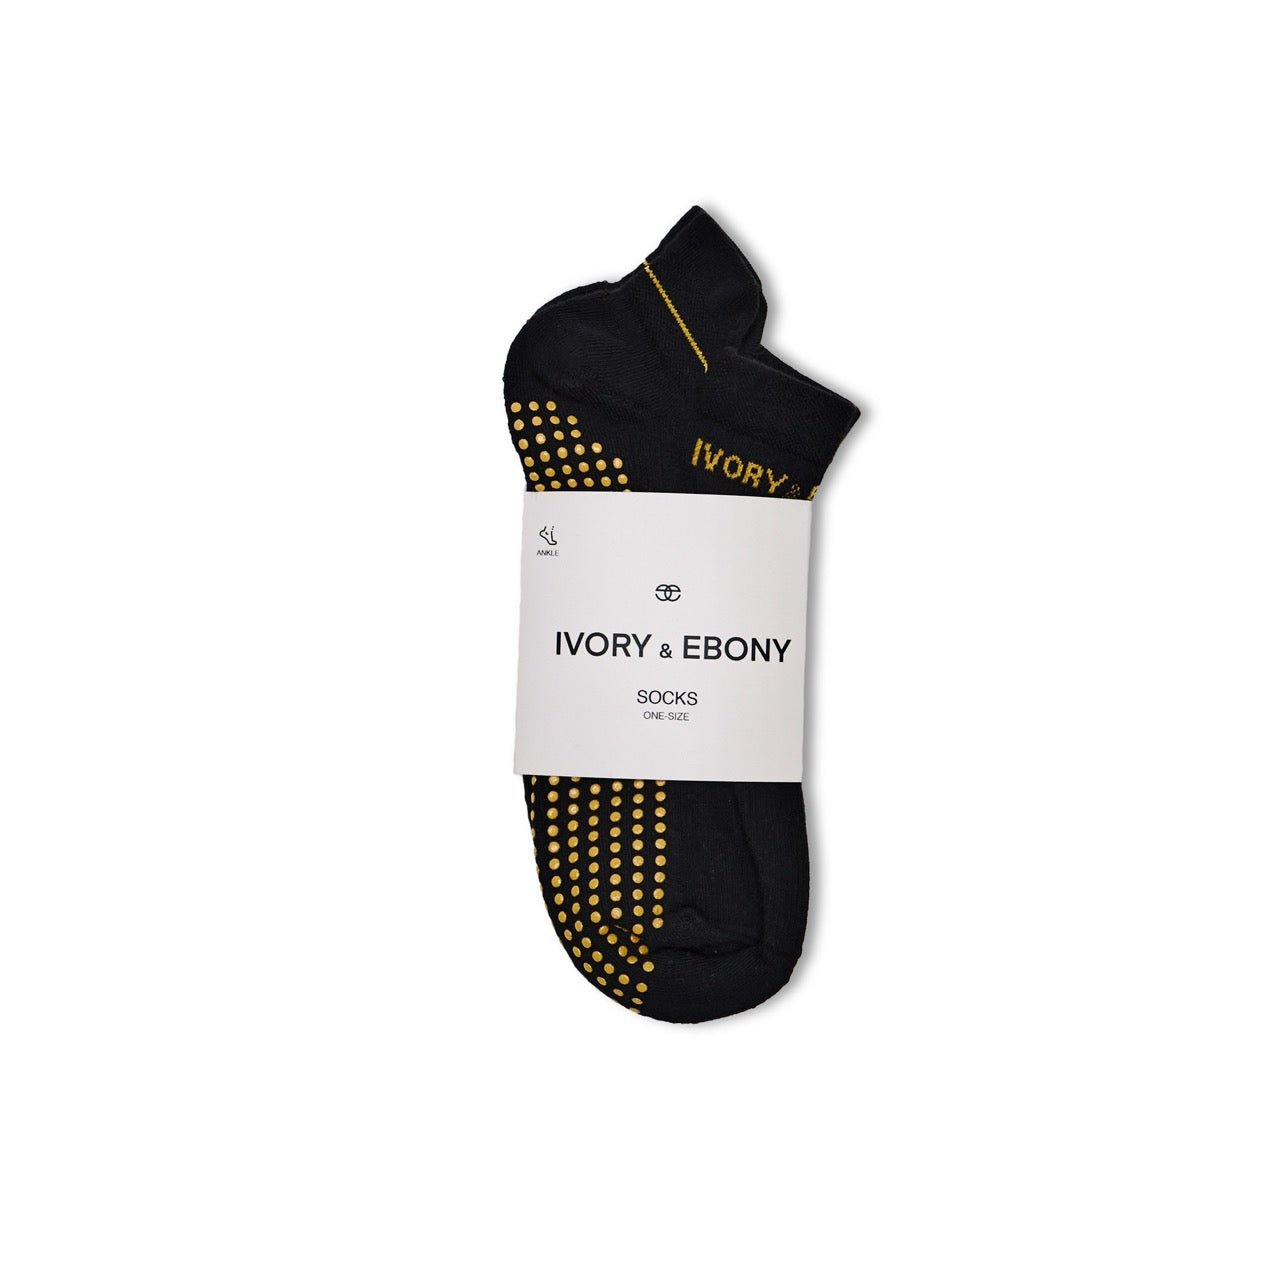 Unisex Elegance, Unrivaled Grip: Ivory & Ebony Anti-Slip Ankle Socks - Extra-Long Staple Cotton, Cushioned Footbed, Blister Tab, Seamless Toe - Experience Ultimate Comfort.